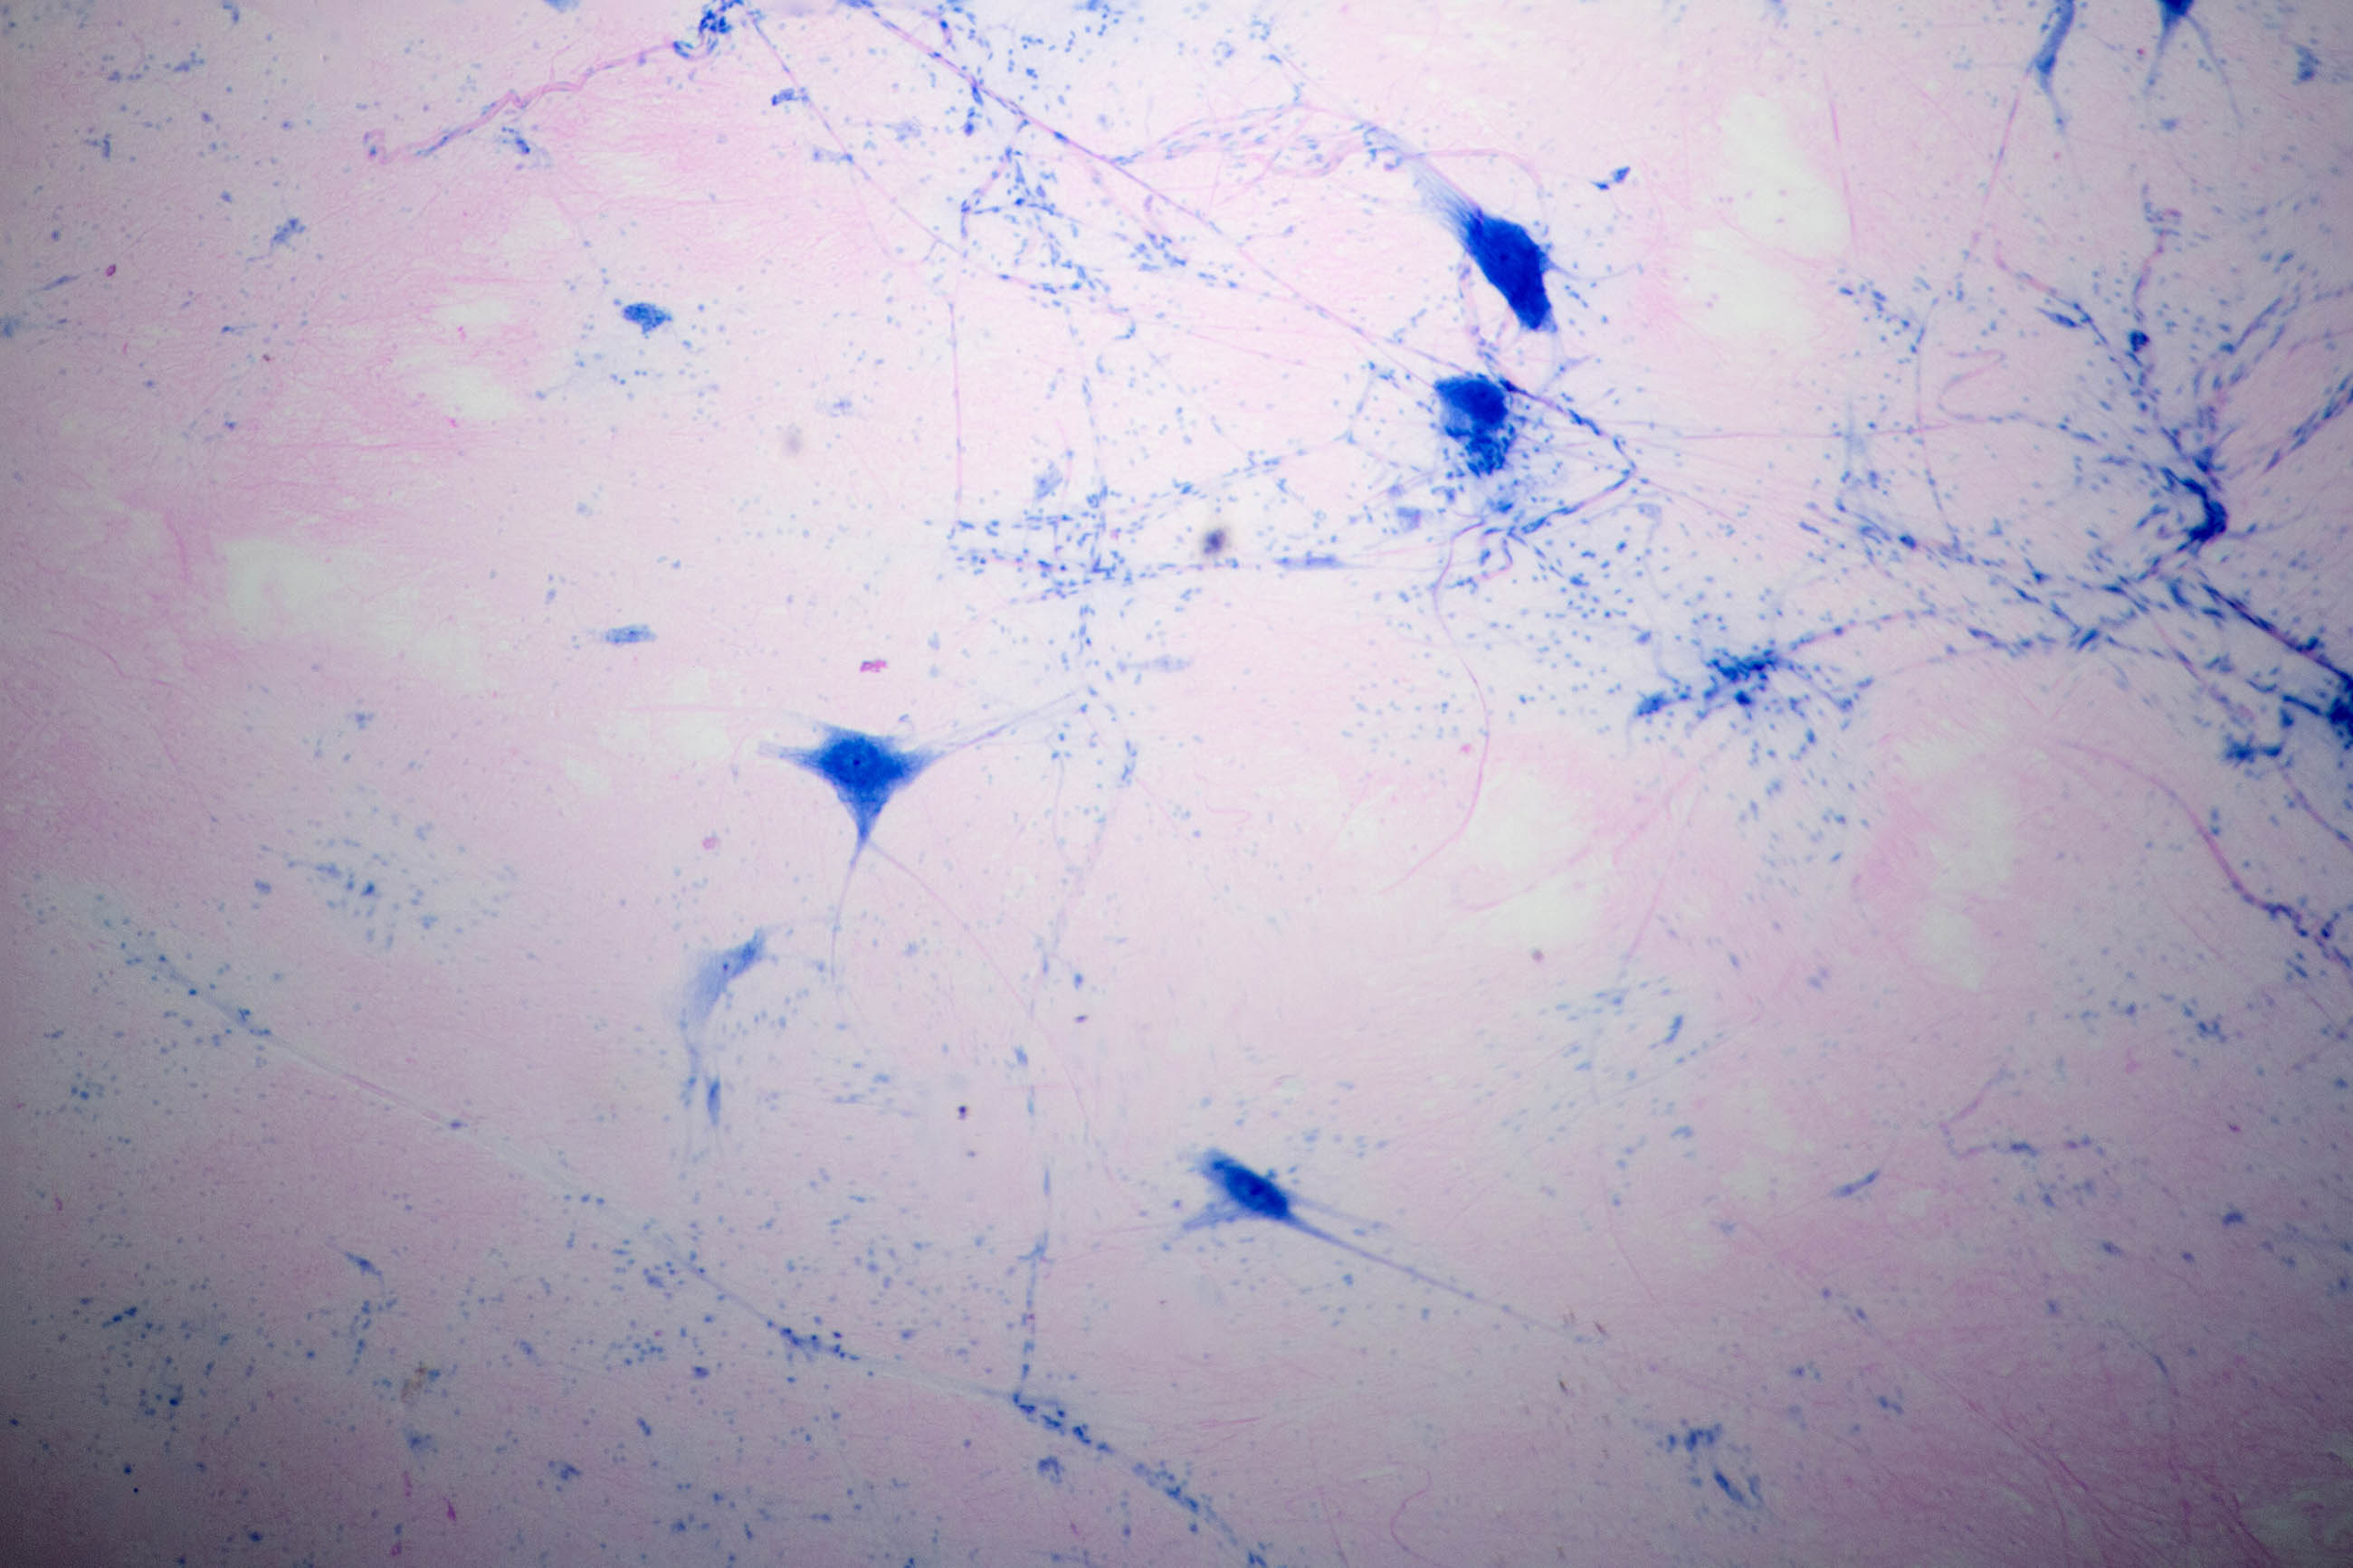 Multipolar neuron microscope view photo